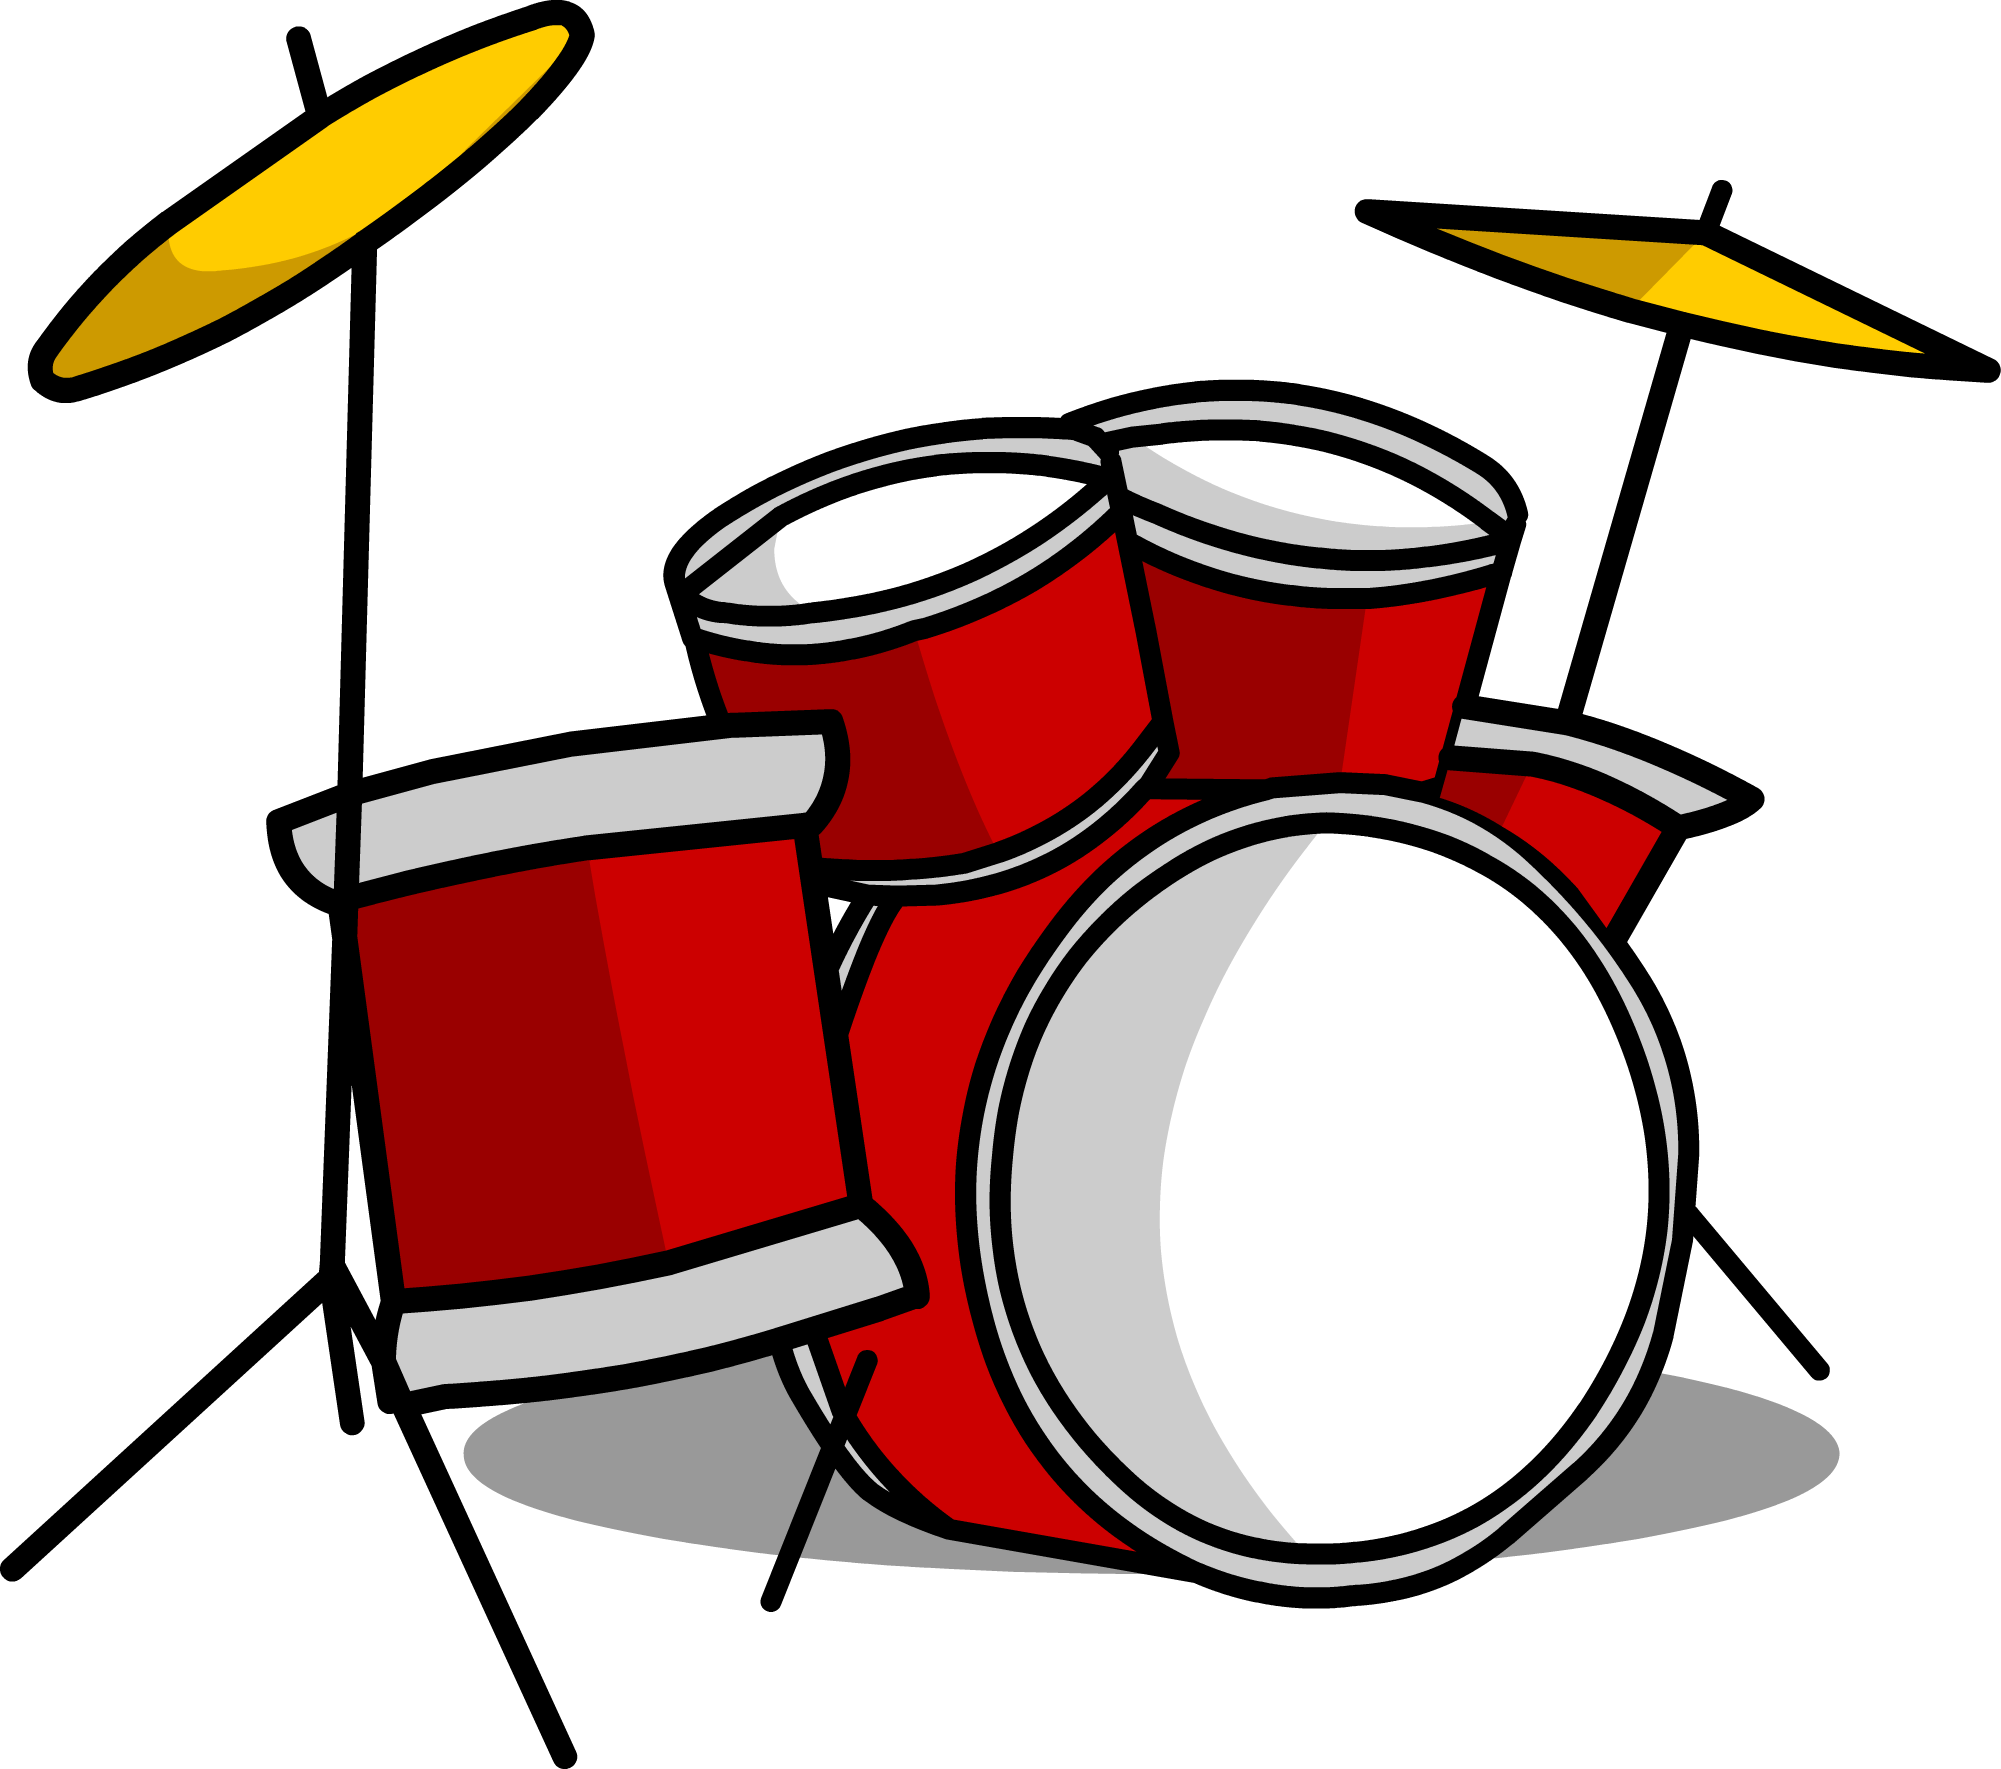 Drum Kit Sprite 007 - Drum Sprite (2001x1769), Png Download